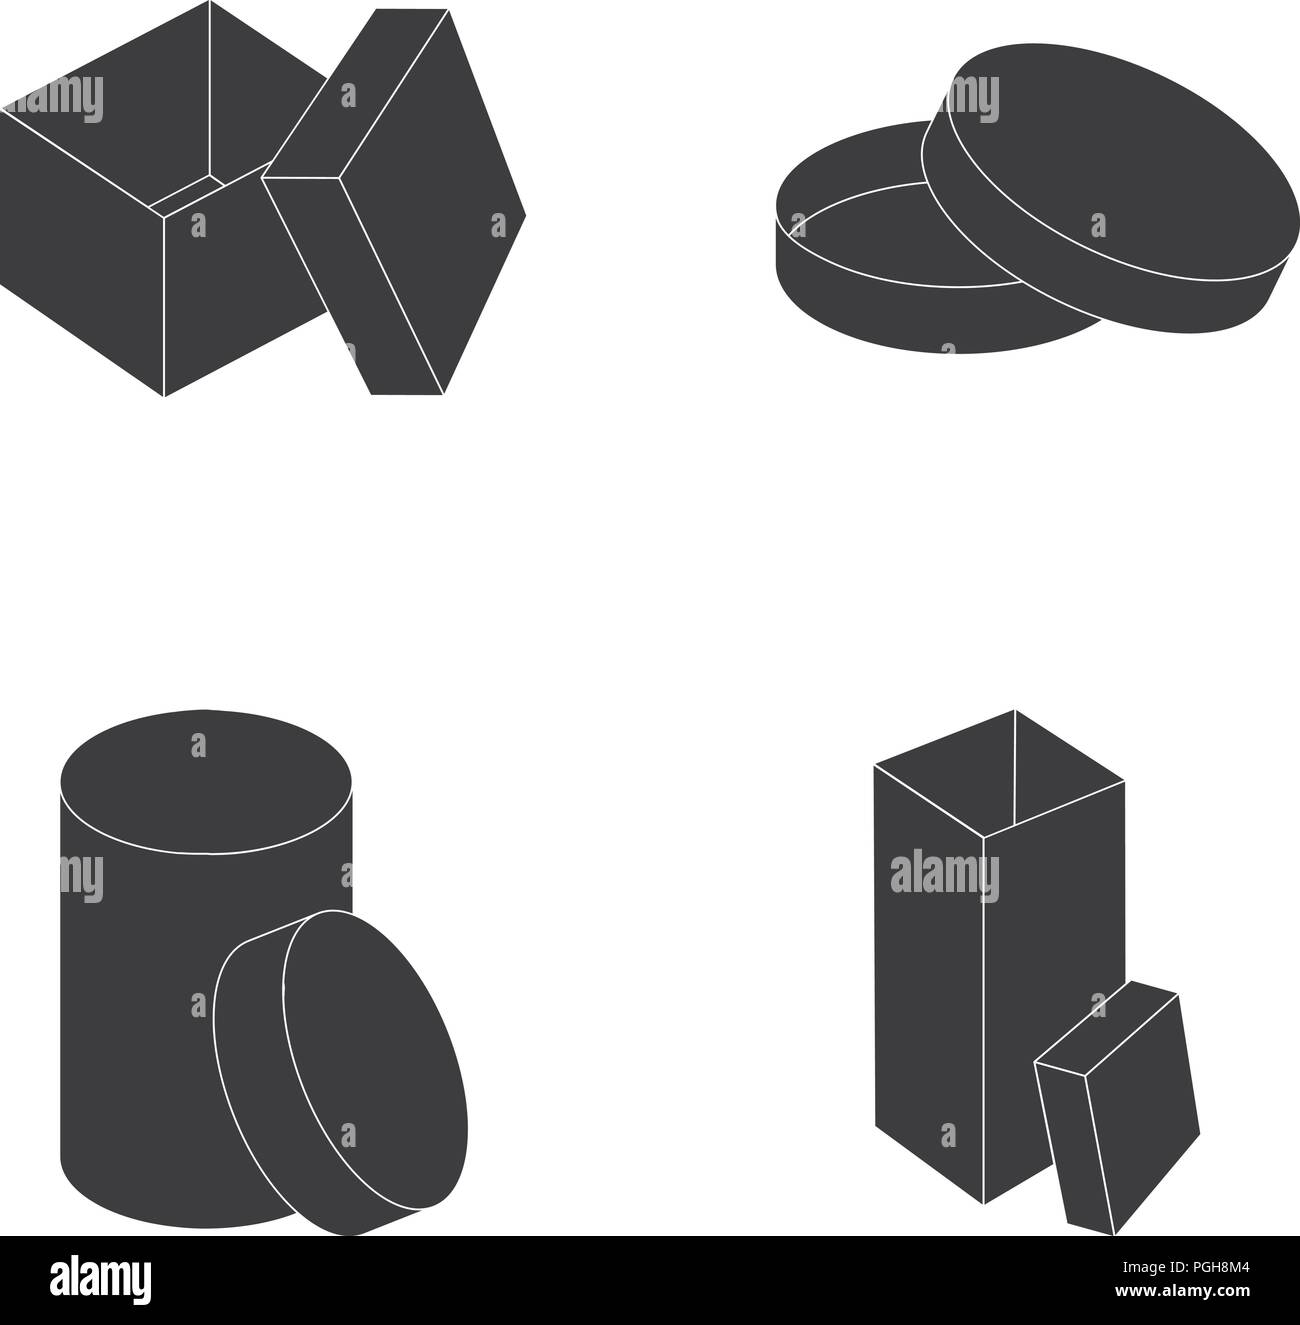 Black Artist Sketching Kit, Packaging Type: Box